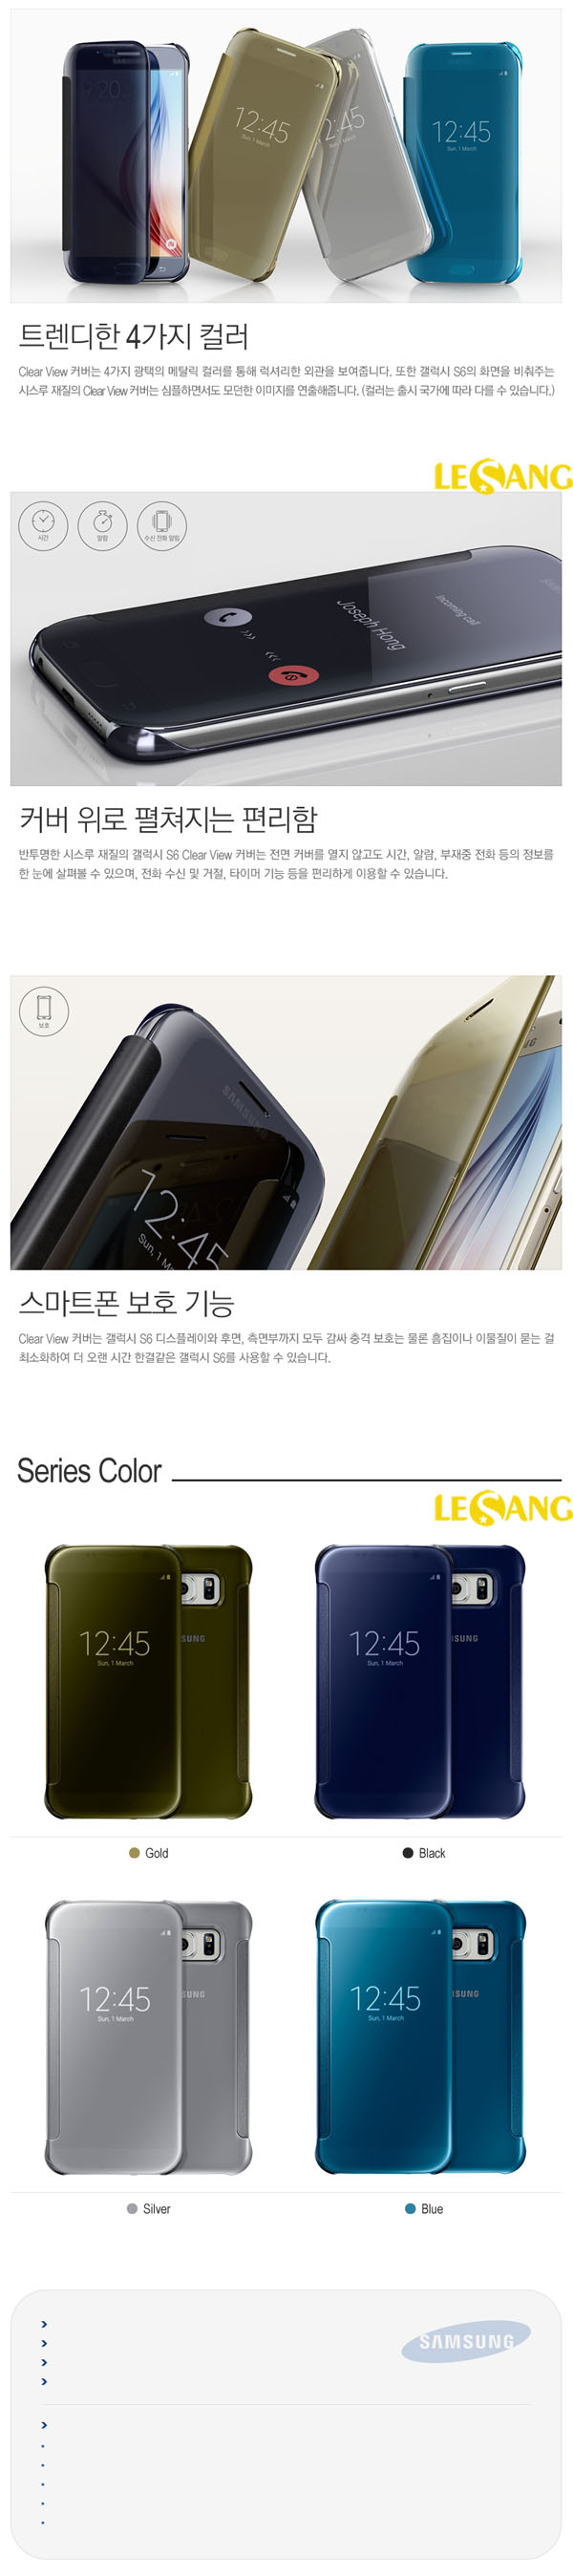 Bao da Galaxy S6 Clear View Cover chính hãng Samsung 32